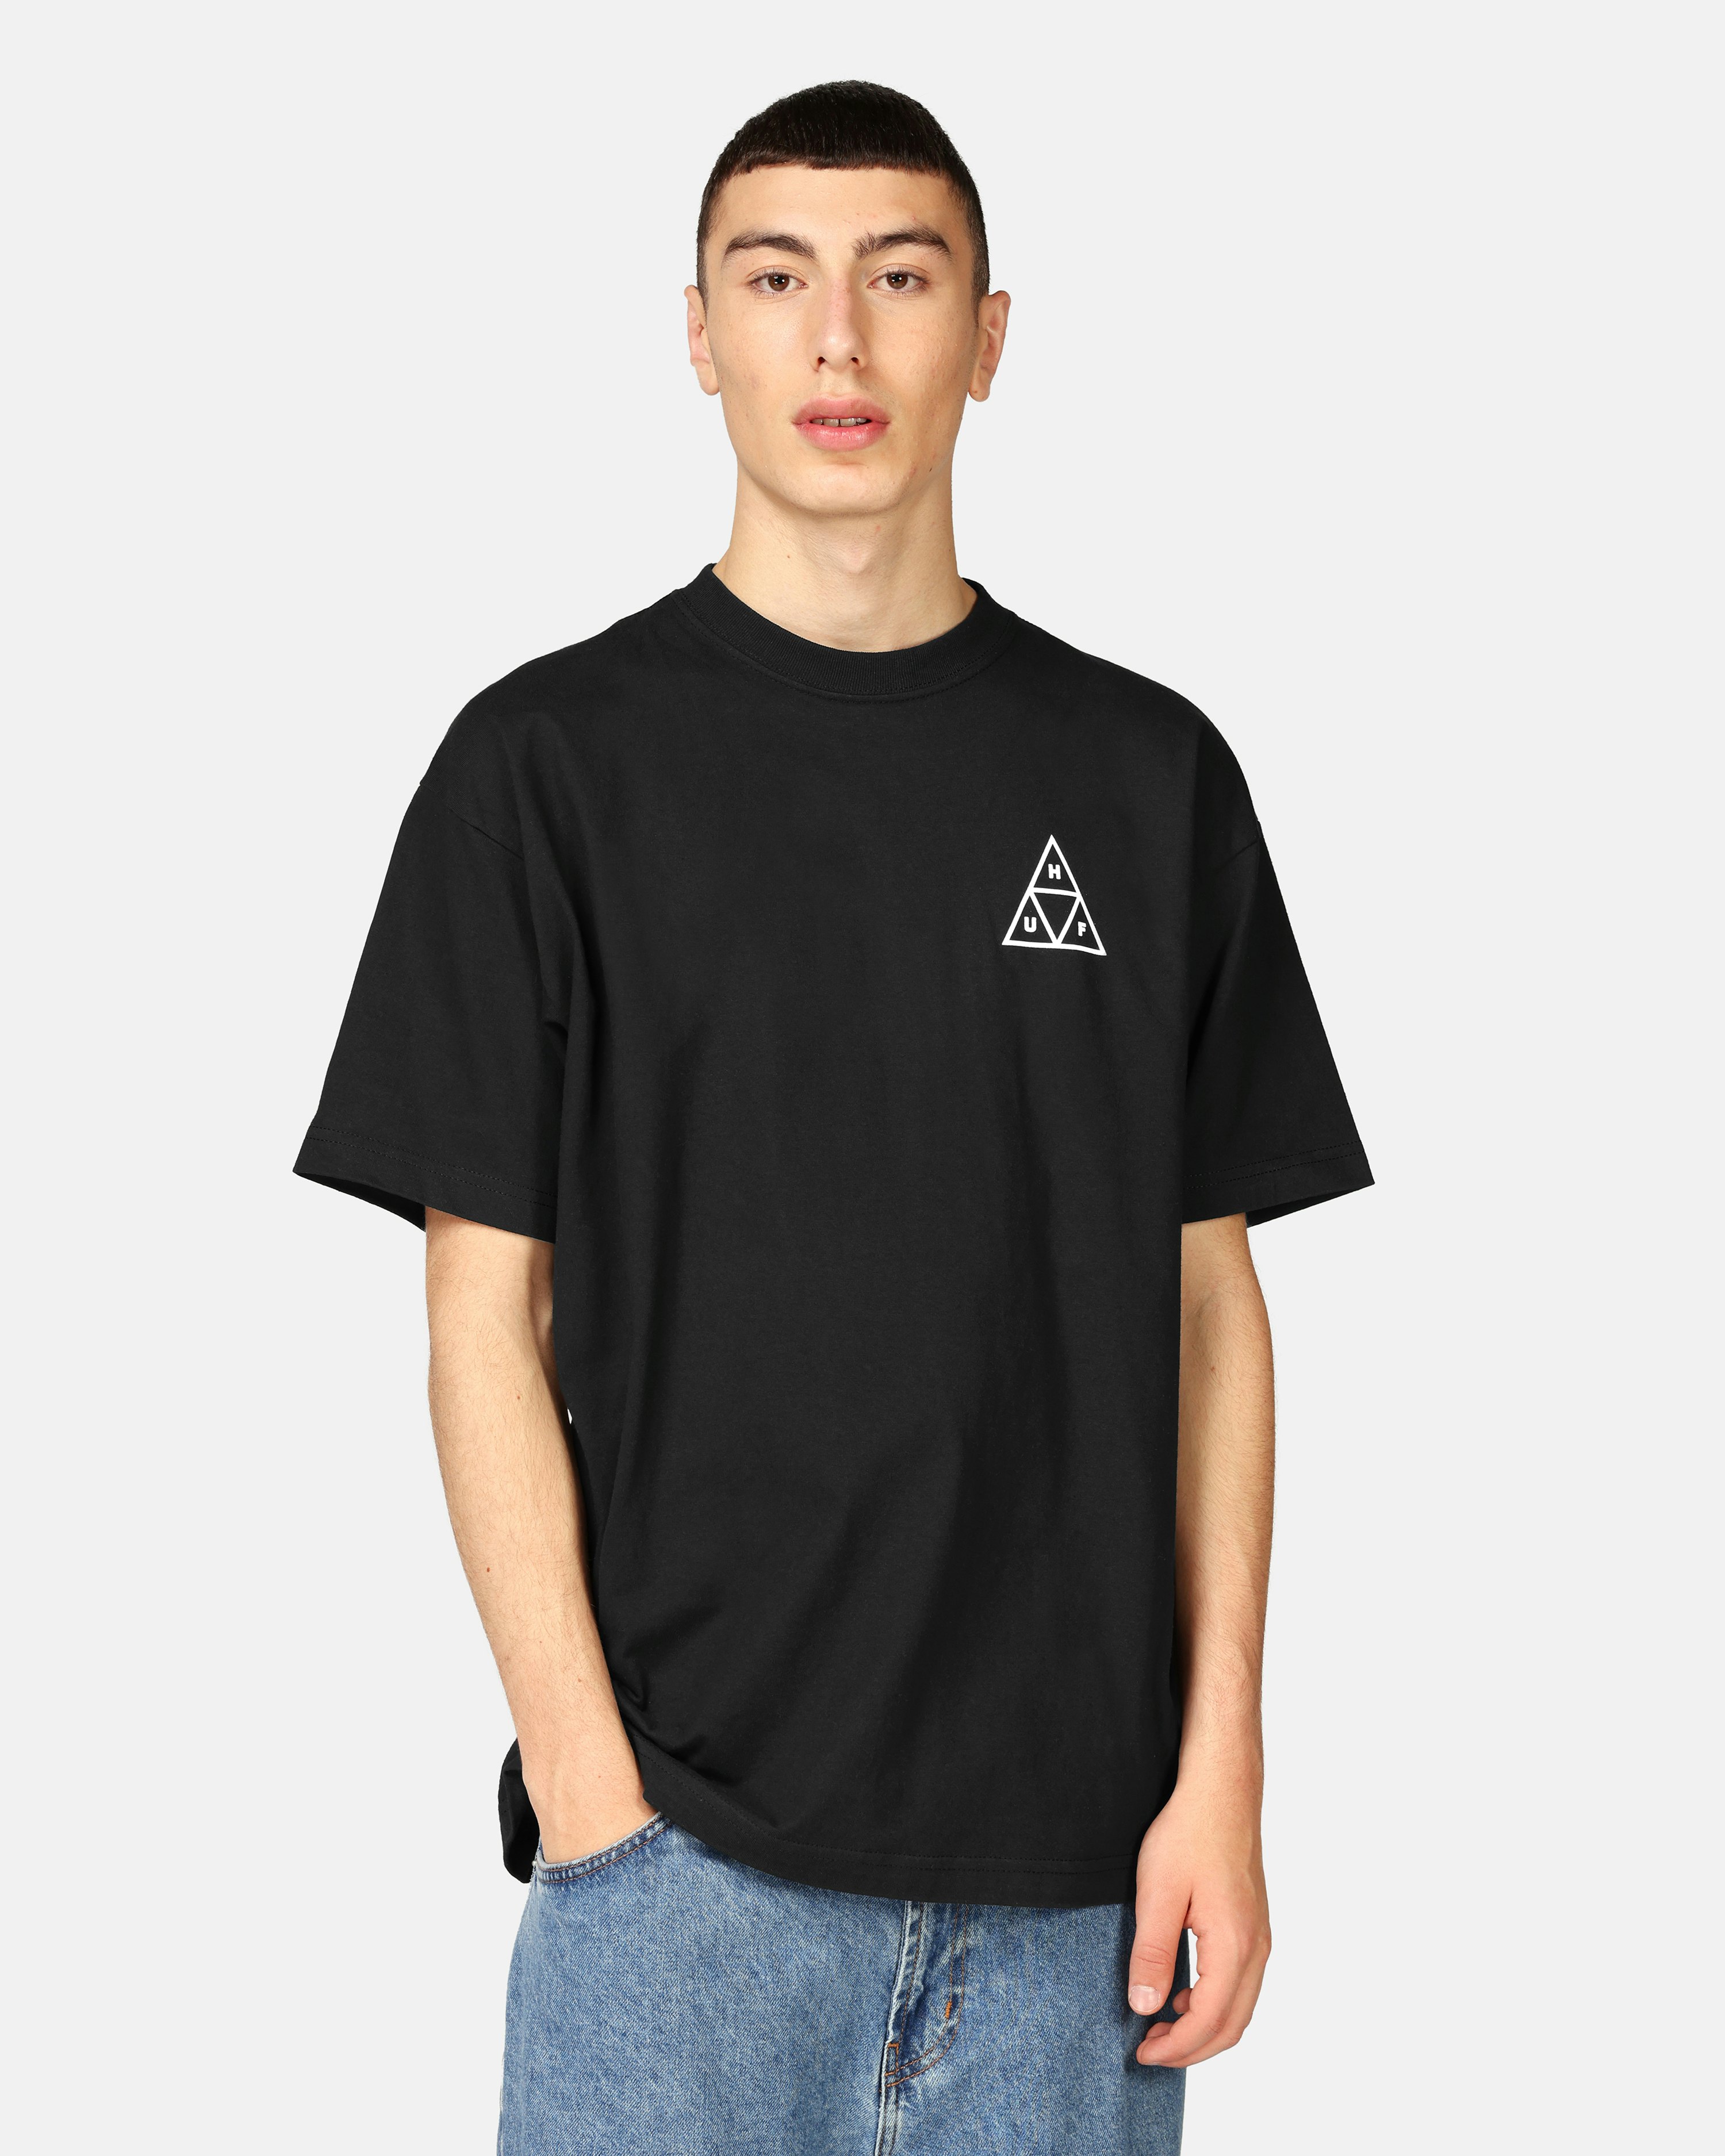 Shorty's T-Shirt - Skate Icon Navy | Men | Junkyard